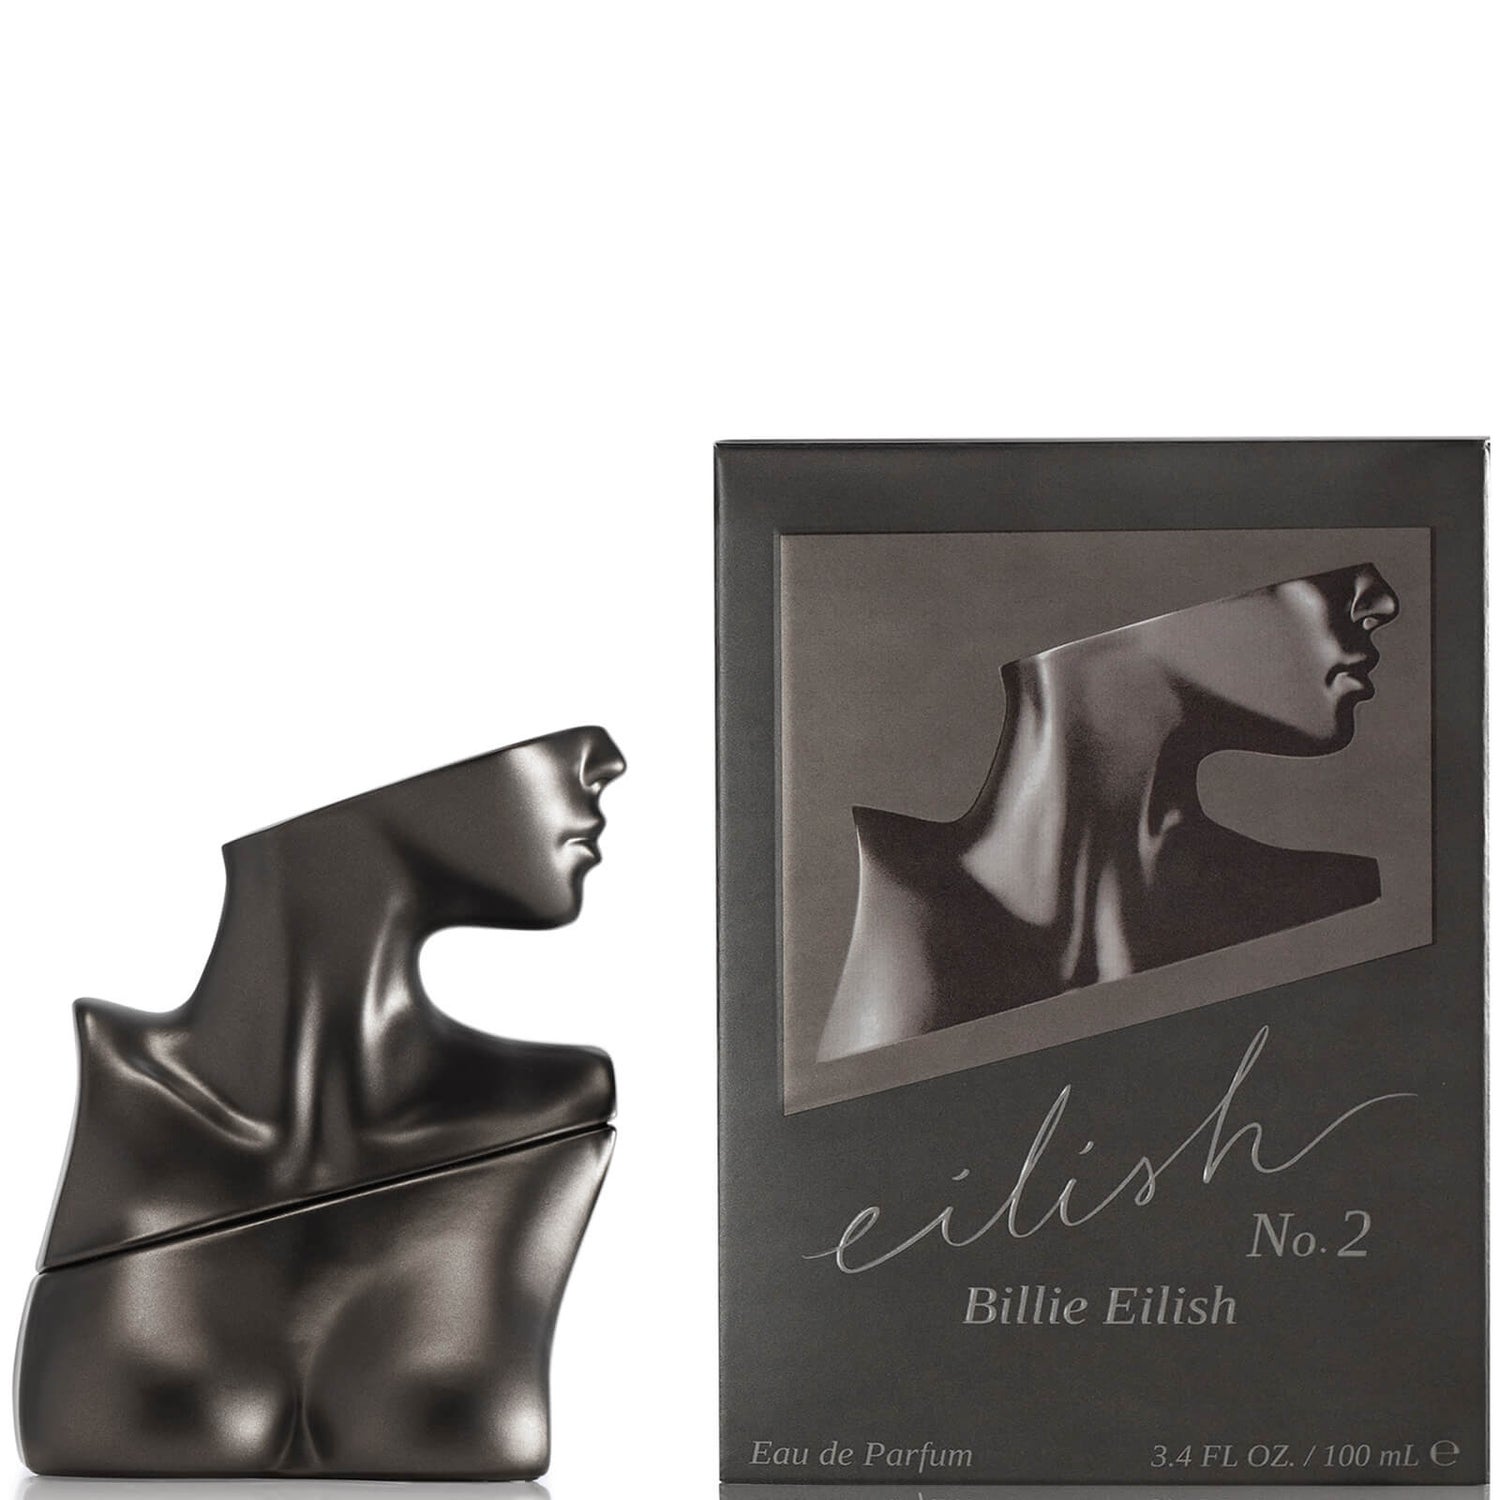 Eilish by Billie Eilish No. 2 Eau de Parfum 100ml